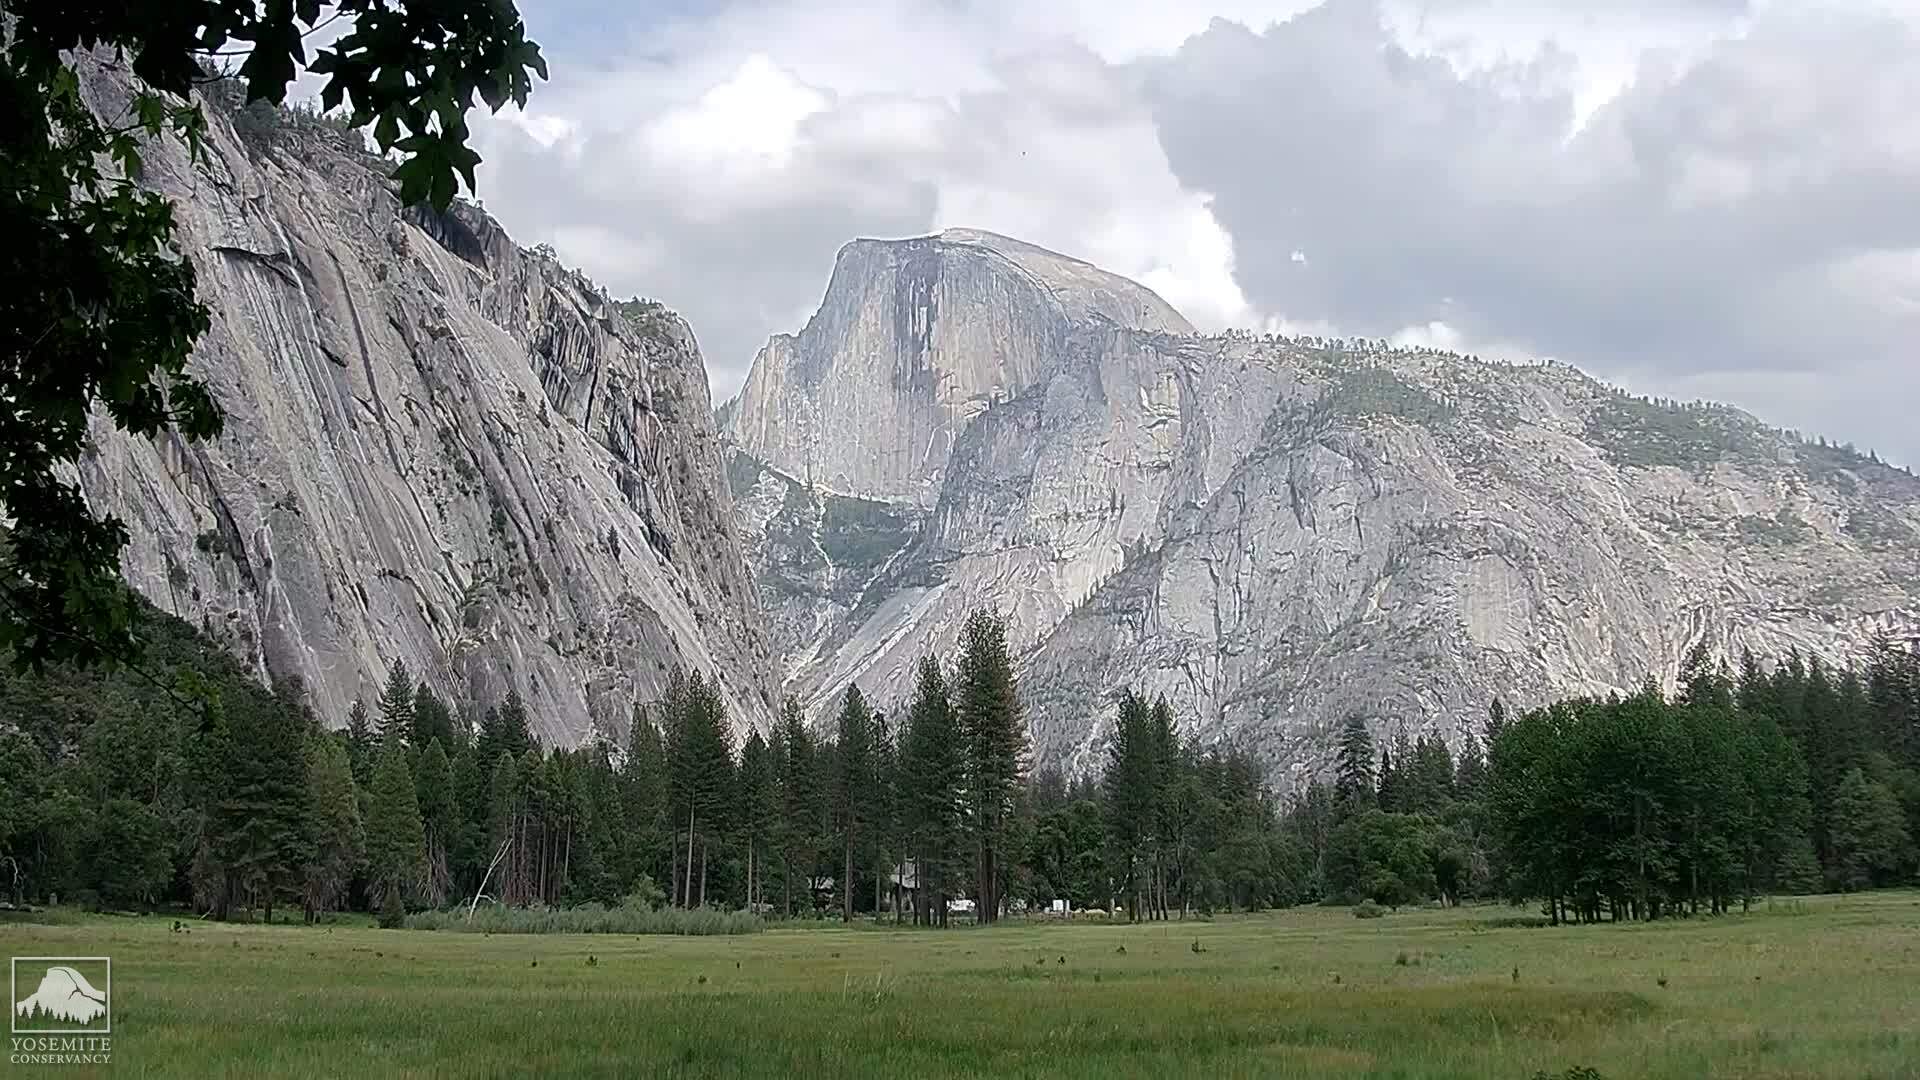 Yosemite National Park, Californie Me. 15:45